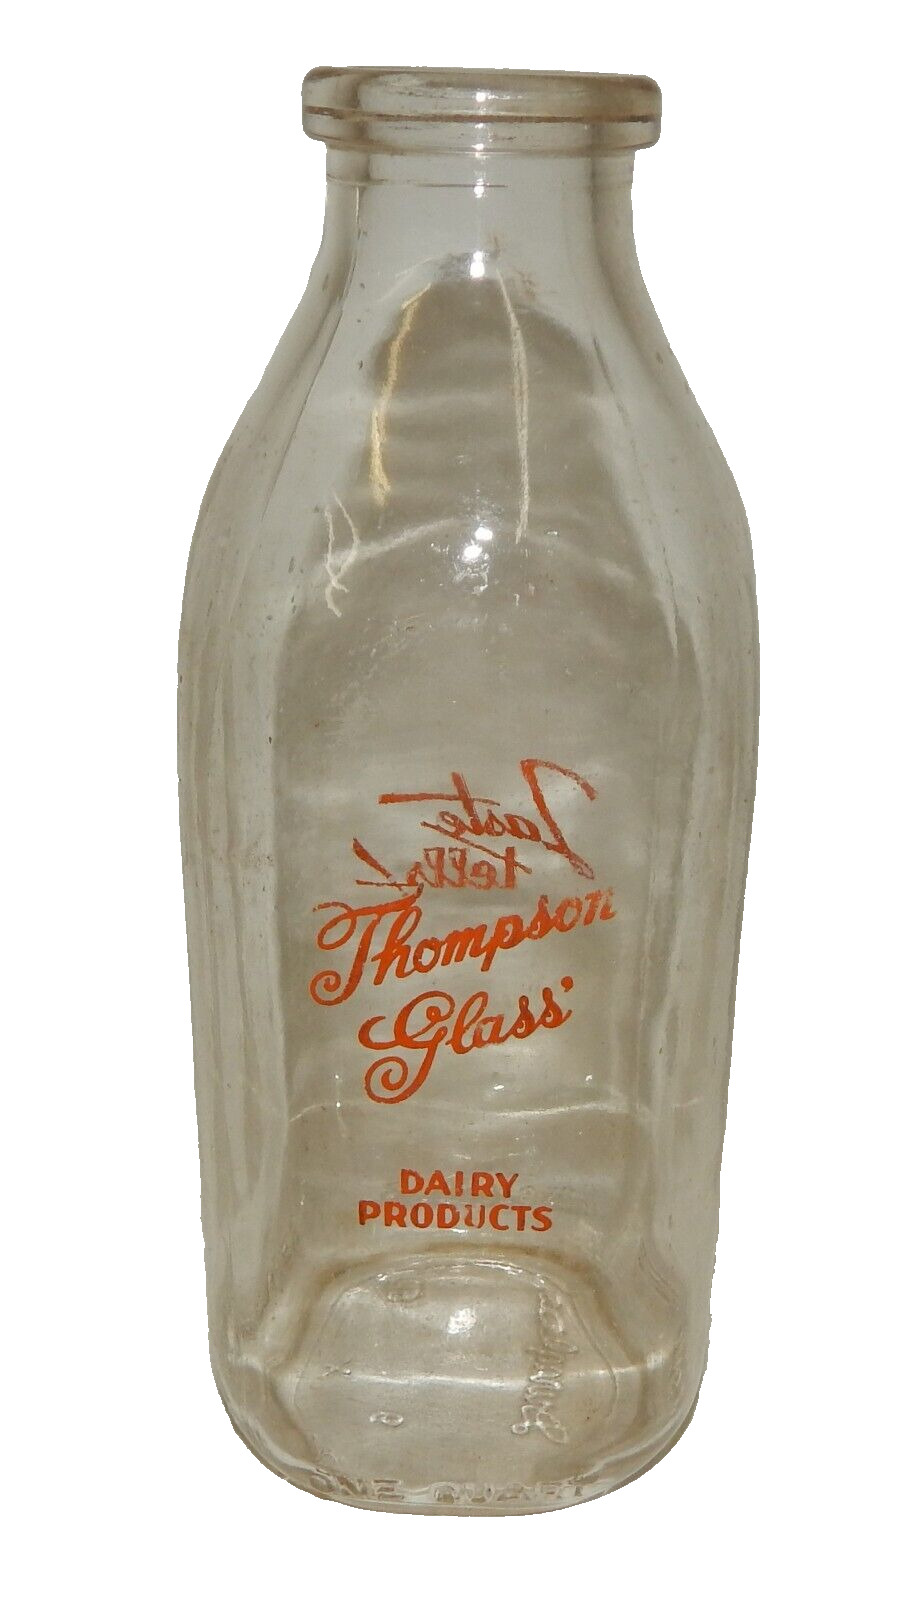 Vintage Thompson Glass Dairy Products - Taste Tells - Quart Milk Bottle